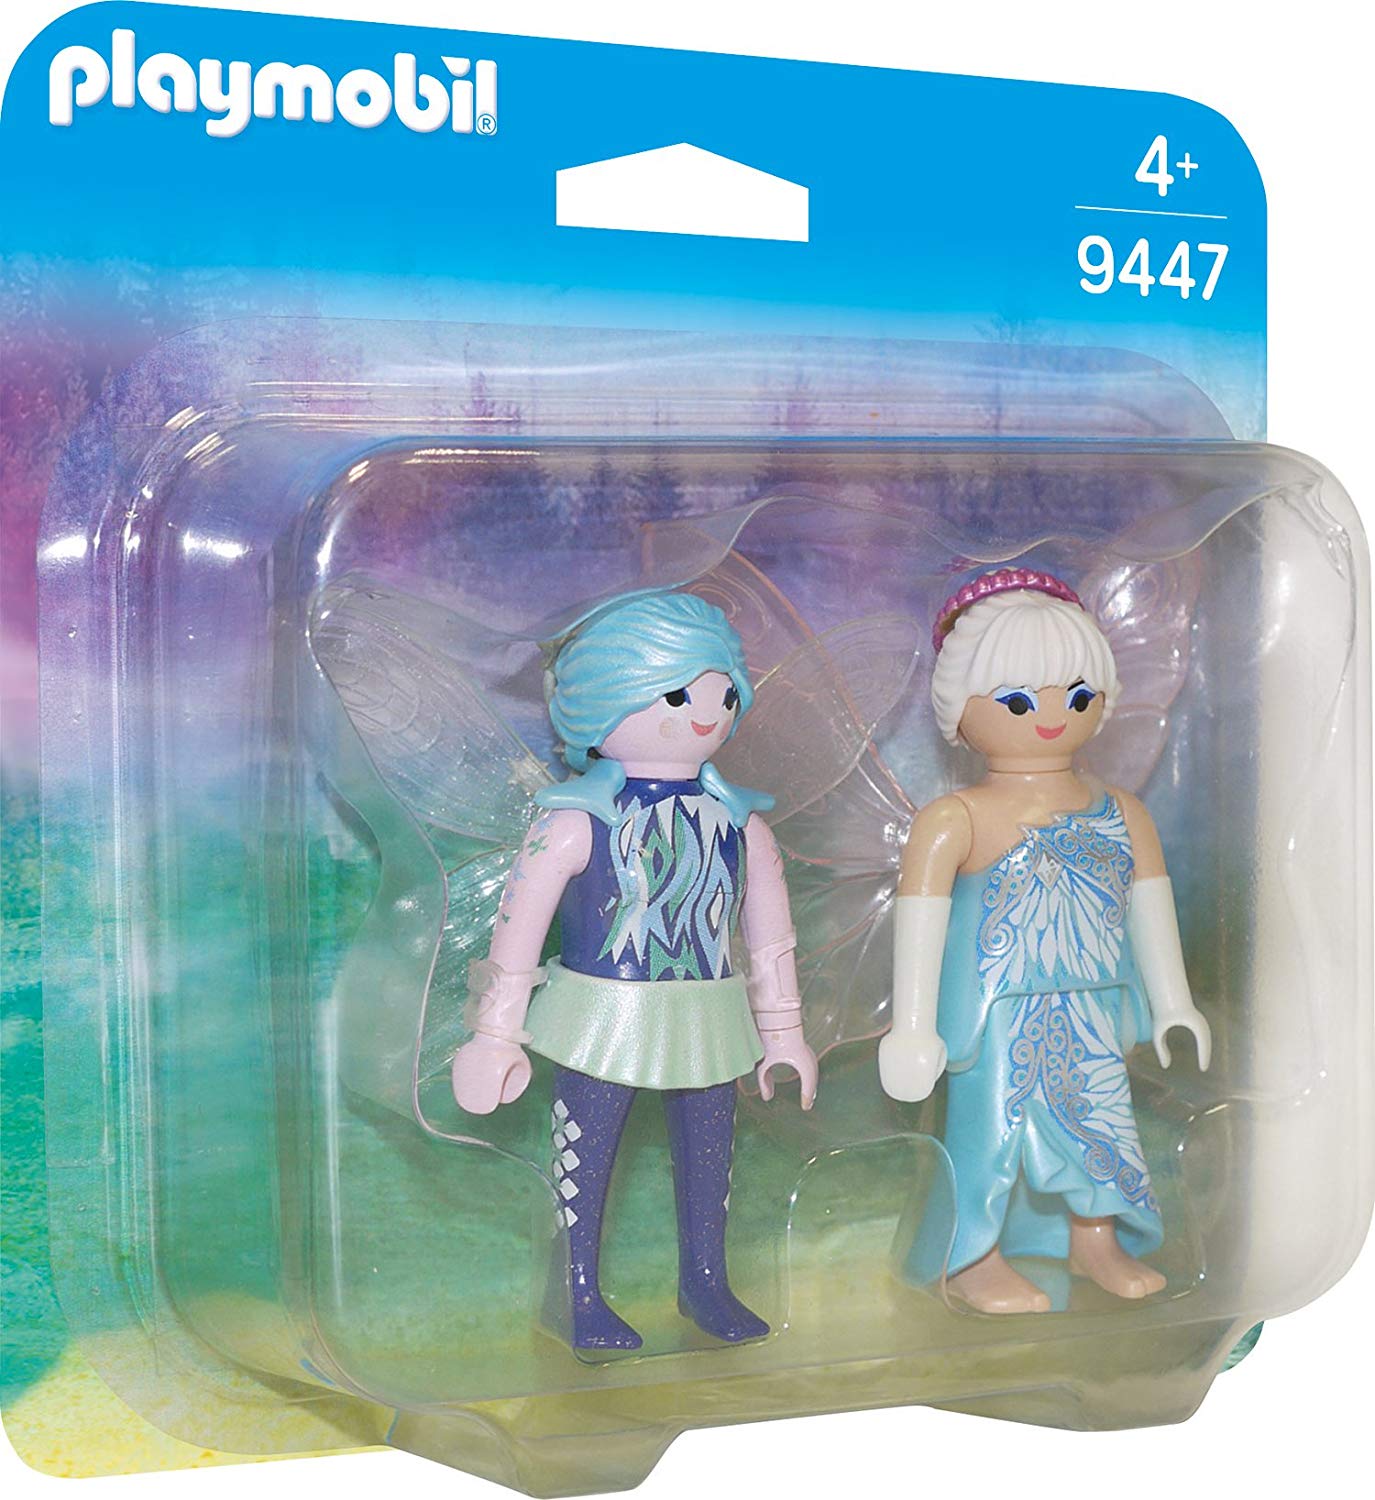 Playmobil Duo Pack Winter Fairies Game